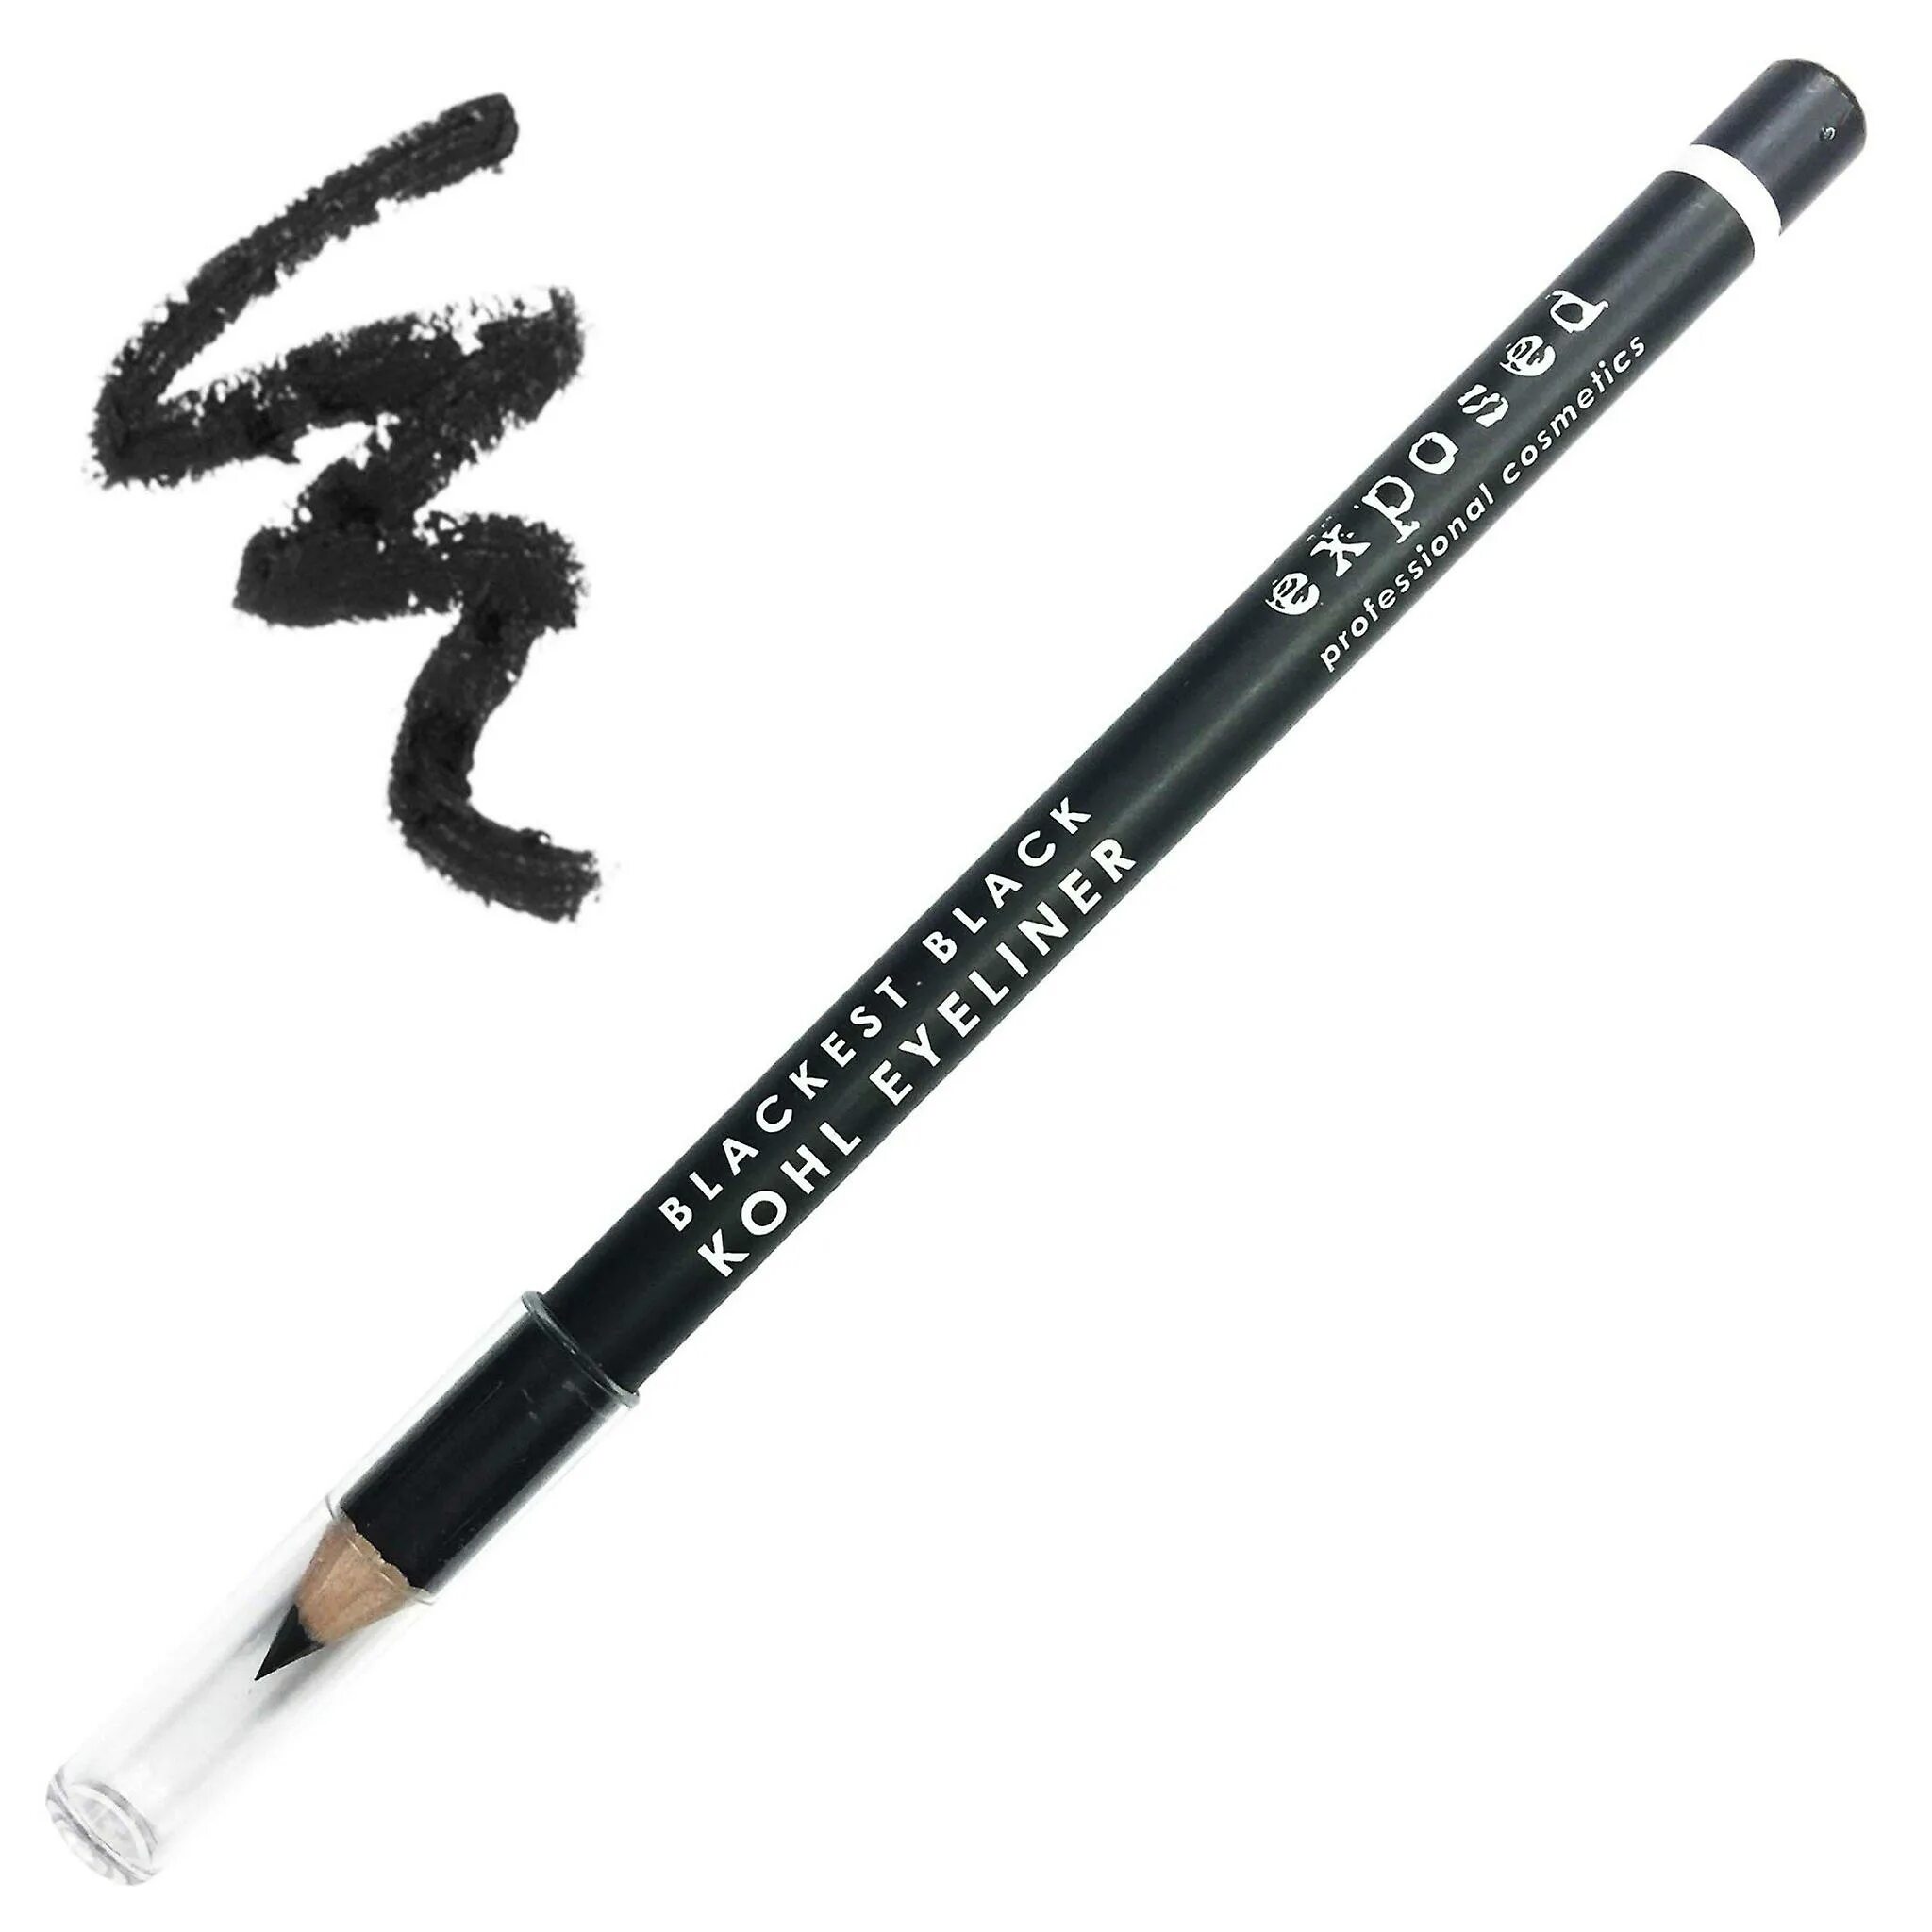 Карандаш Ultimate Kohl Kajal Eyeliner. Kohl Eyeliner Pencil. W7 Eye Pencil King Kohl Black 1g. Черный карандаш для глаз.